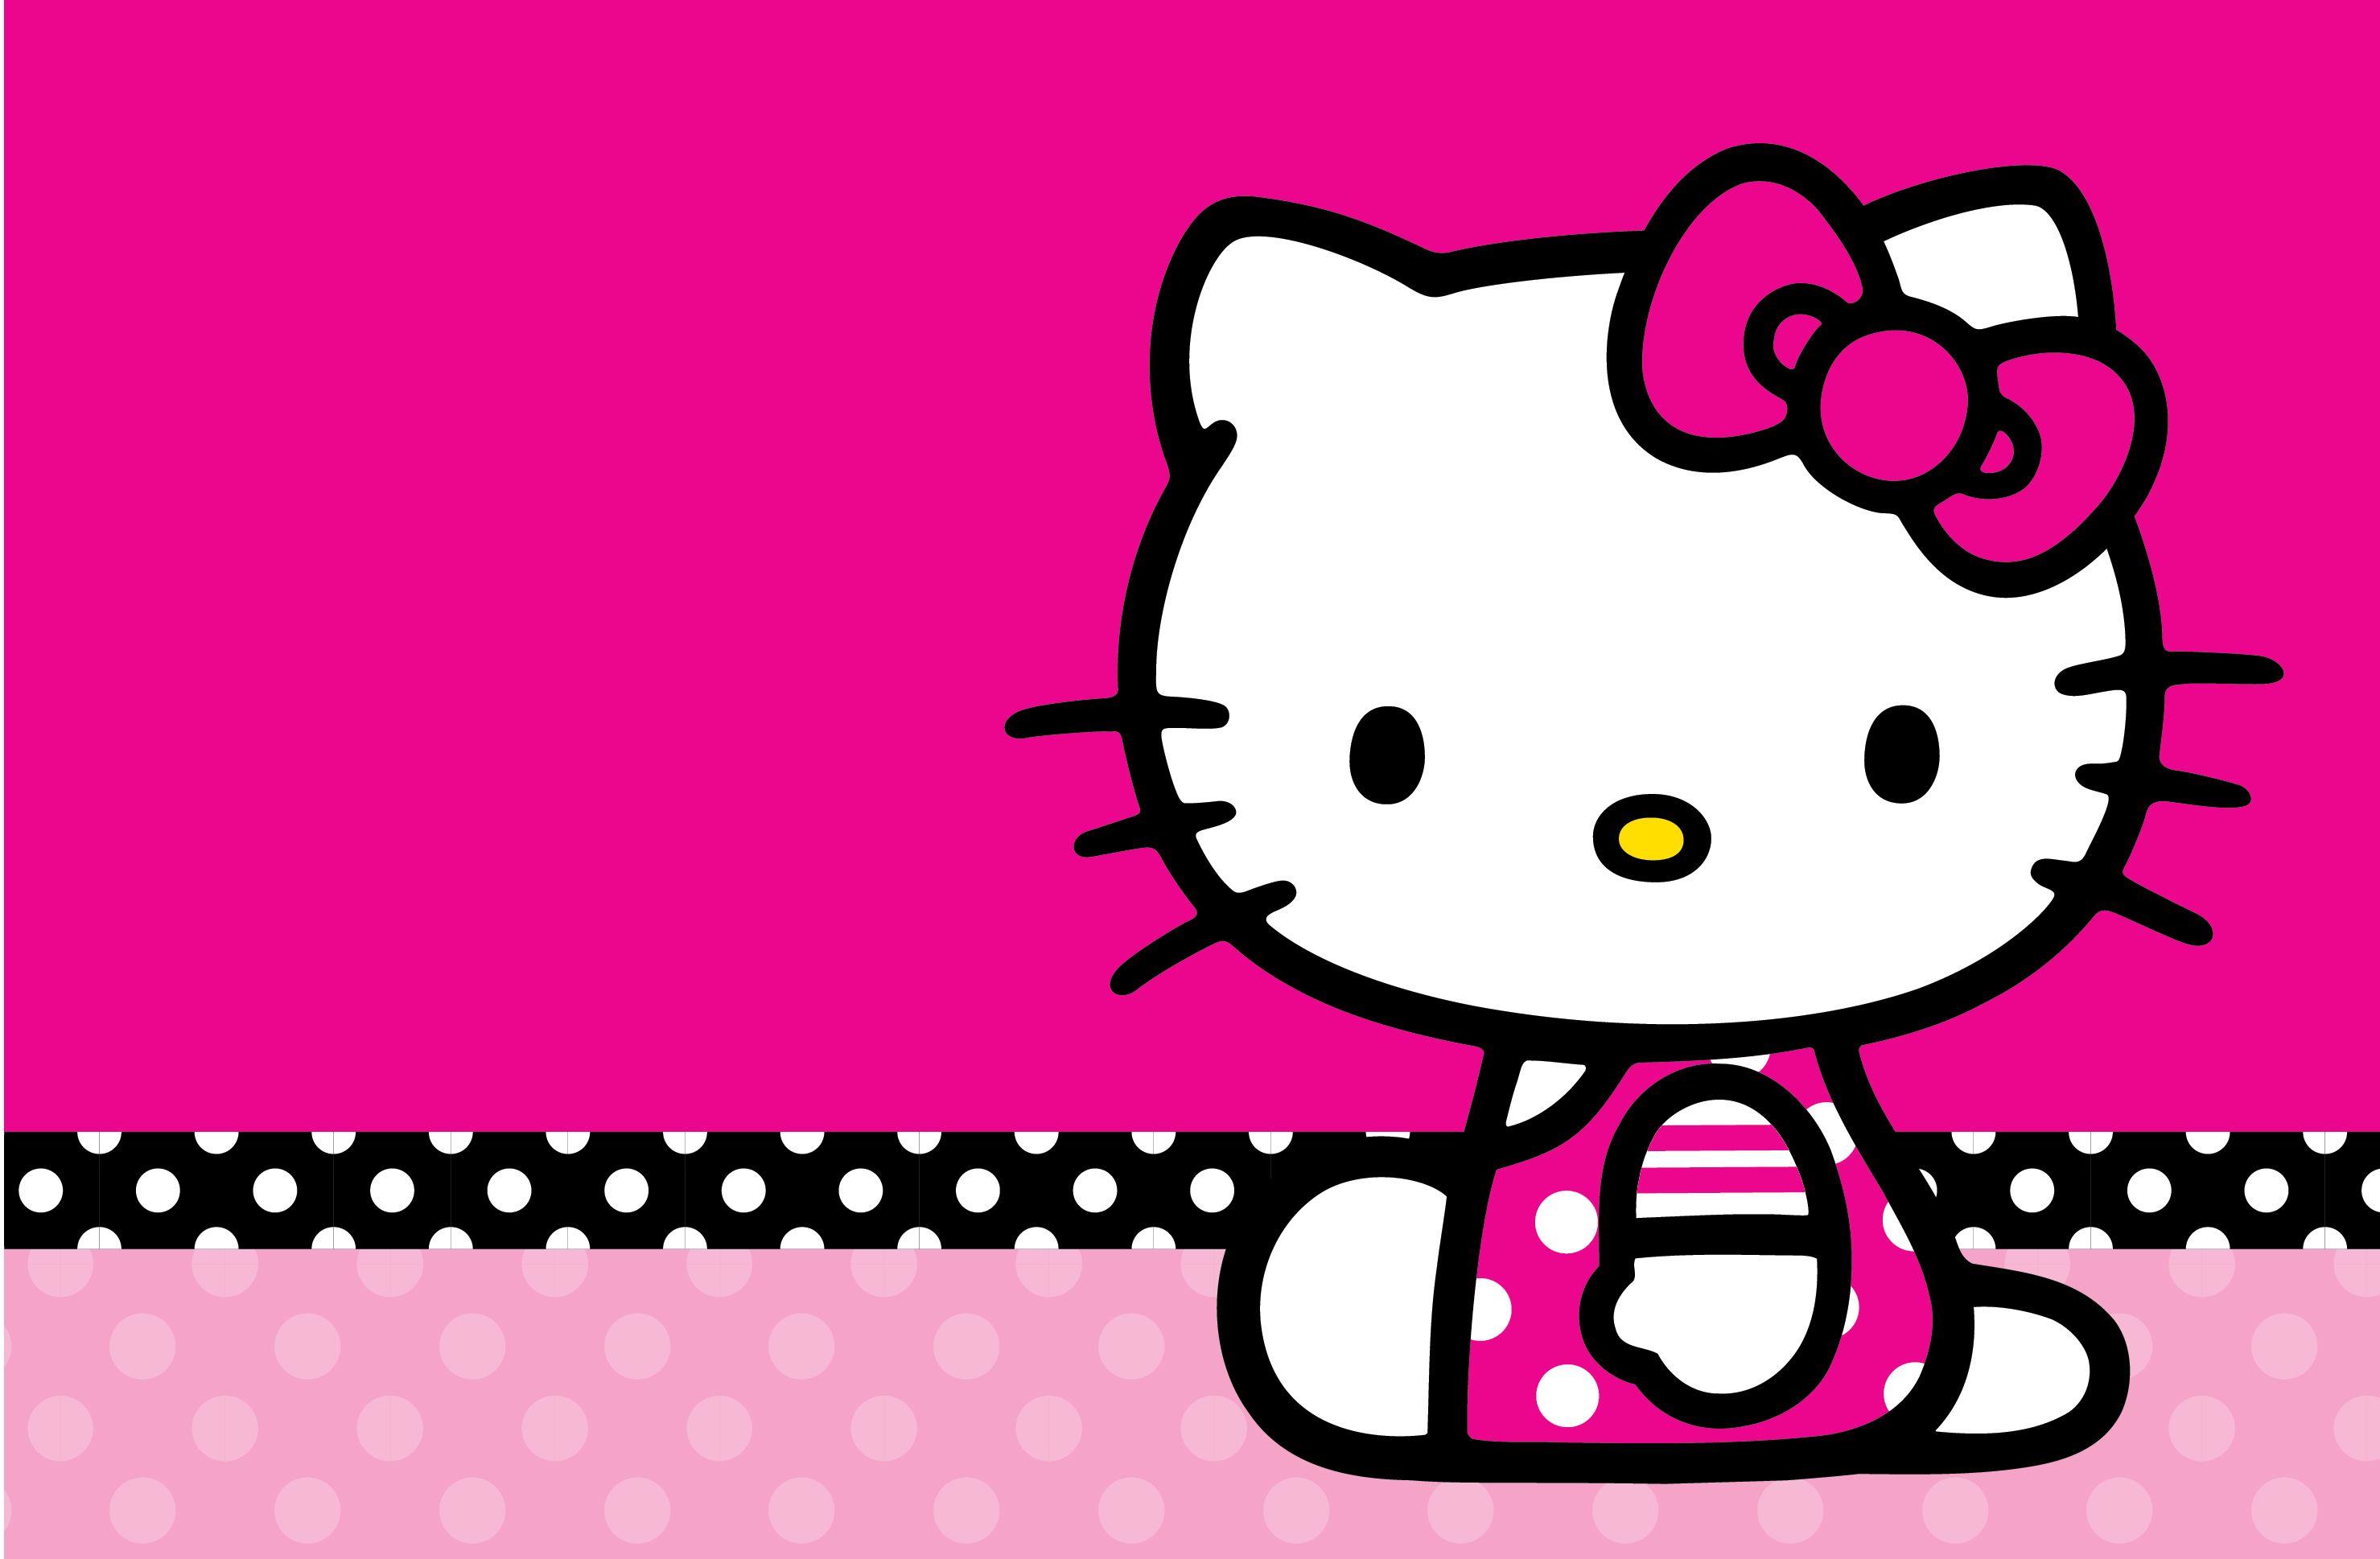 Quality Hello Kitty Wallpaper, Celebrity